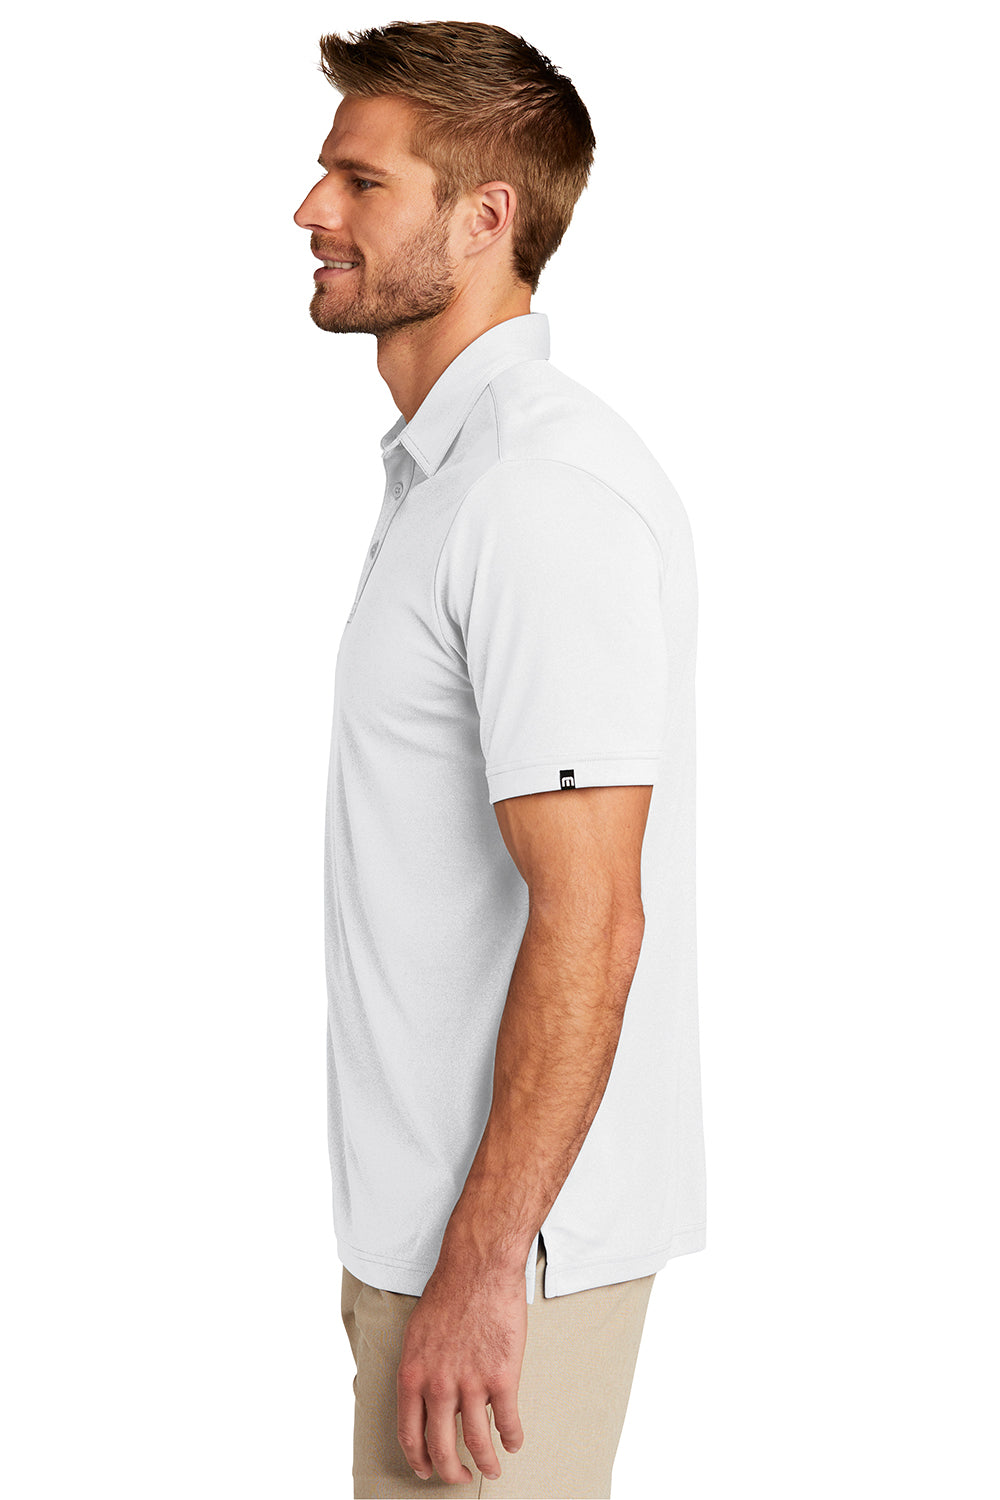 TravisMathew TM1MU410 Mens Coto Performance Moisture Wicking Short Sleeve Polo Shirt White Model Side